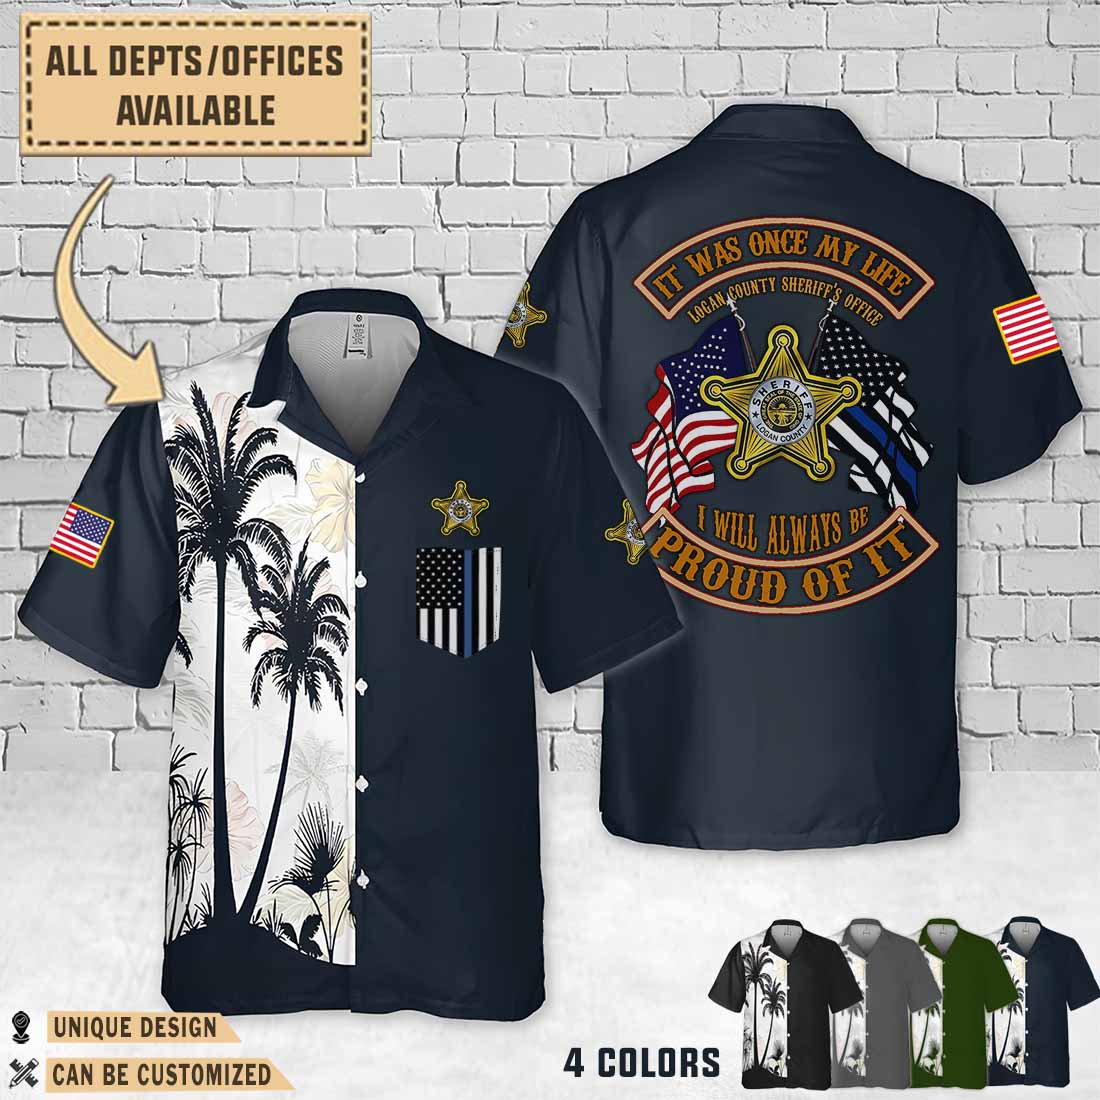 logan county sheriffs office ohdual flag hawaiian shirt ppcub